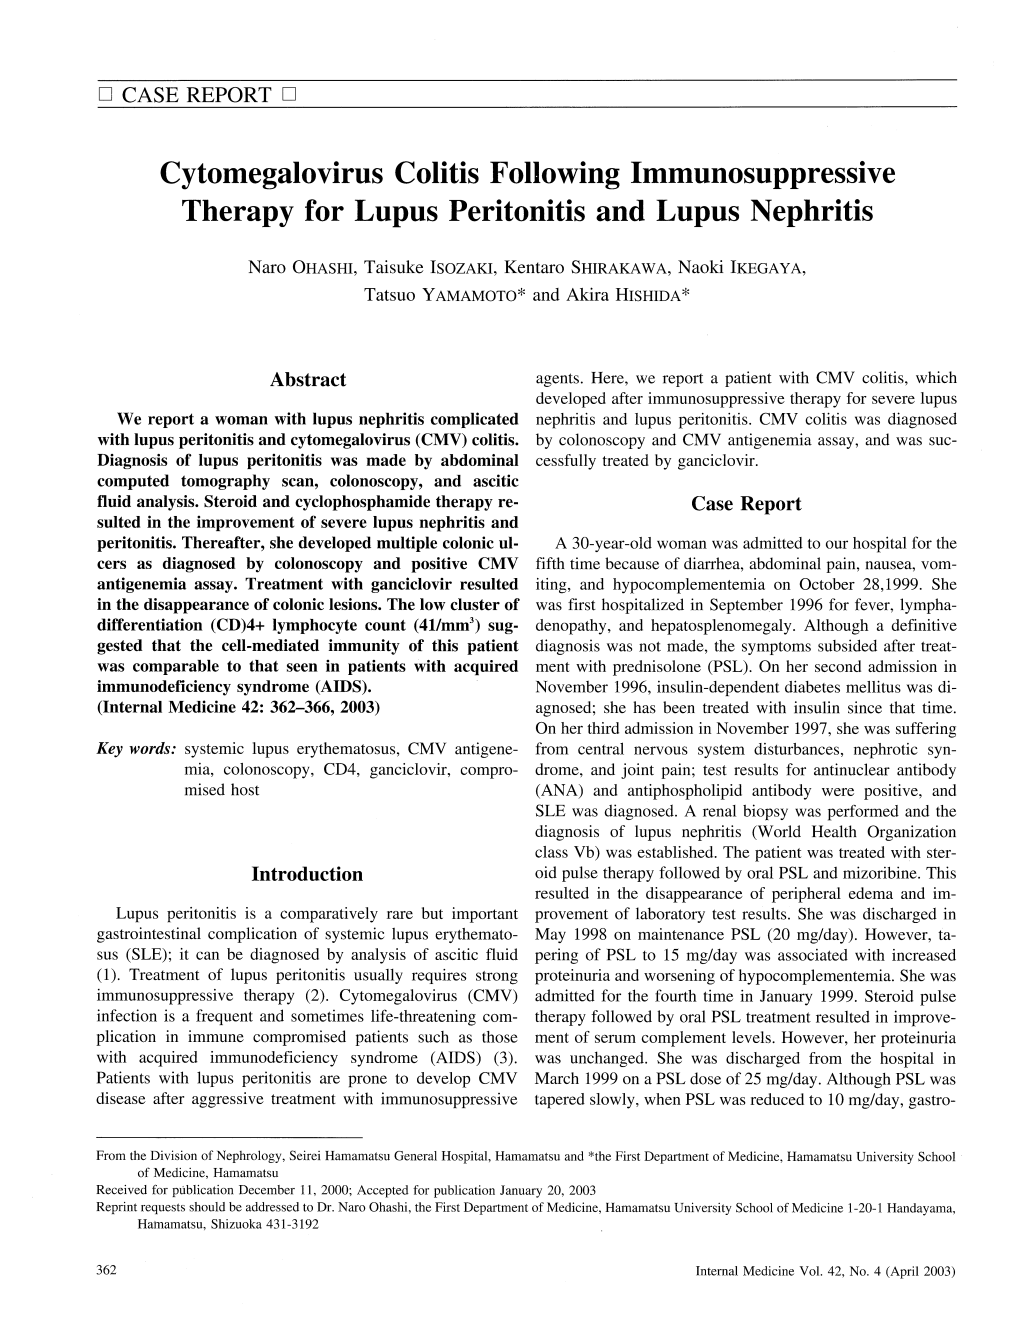 Cytomegalovirus Colitis Following Immunosuppressive